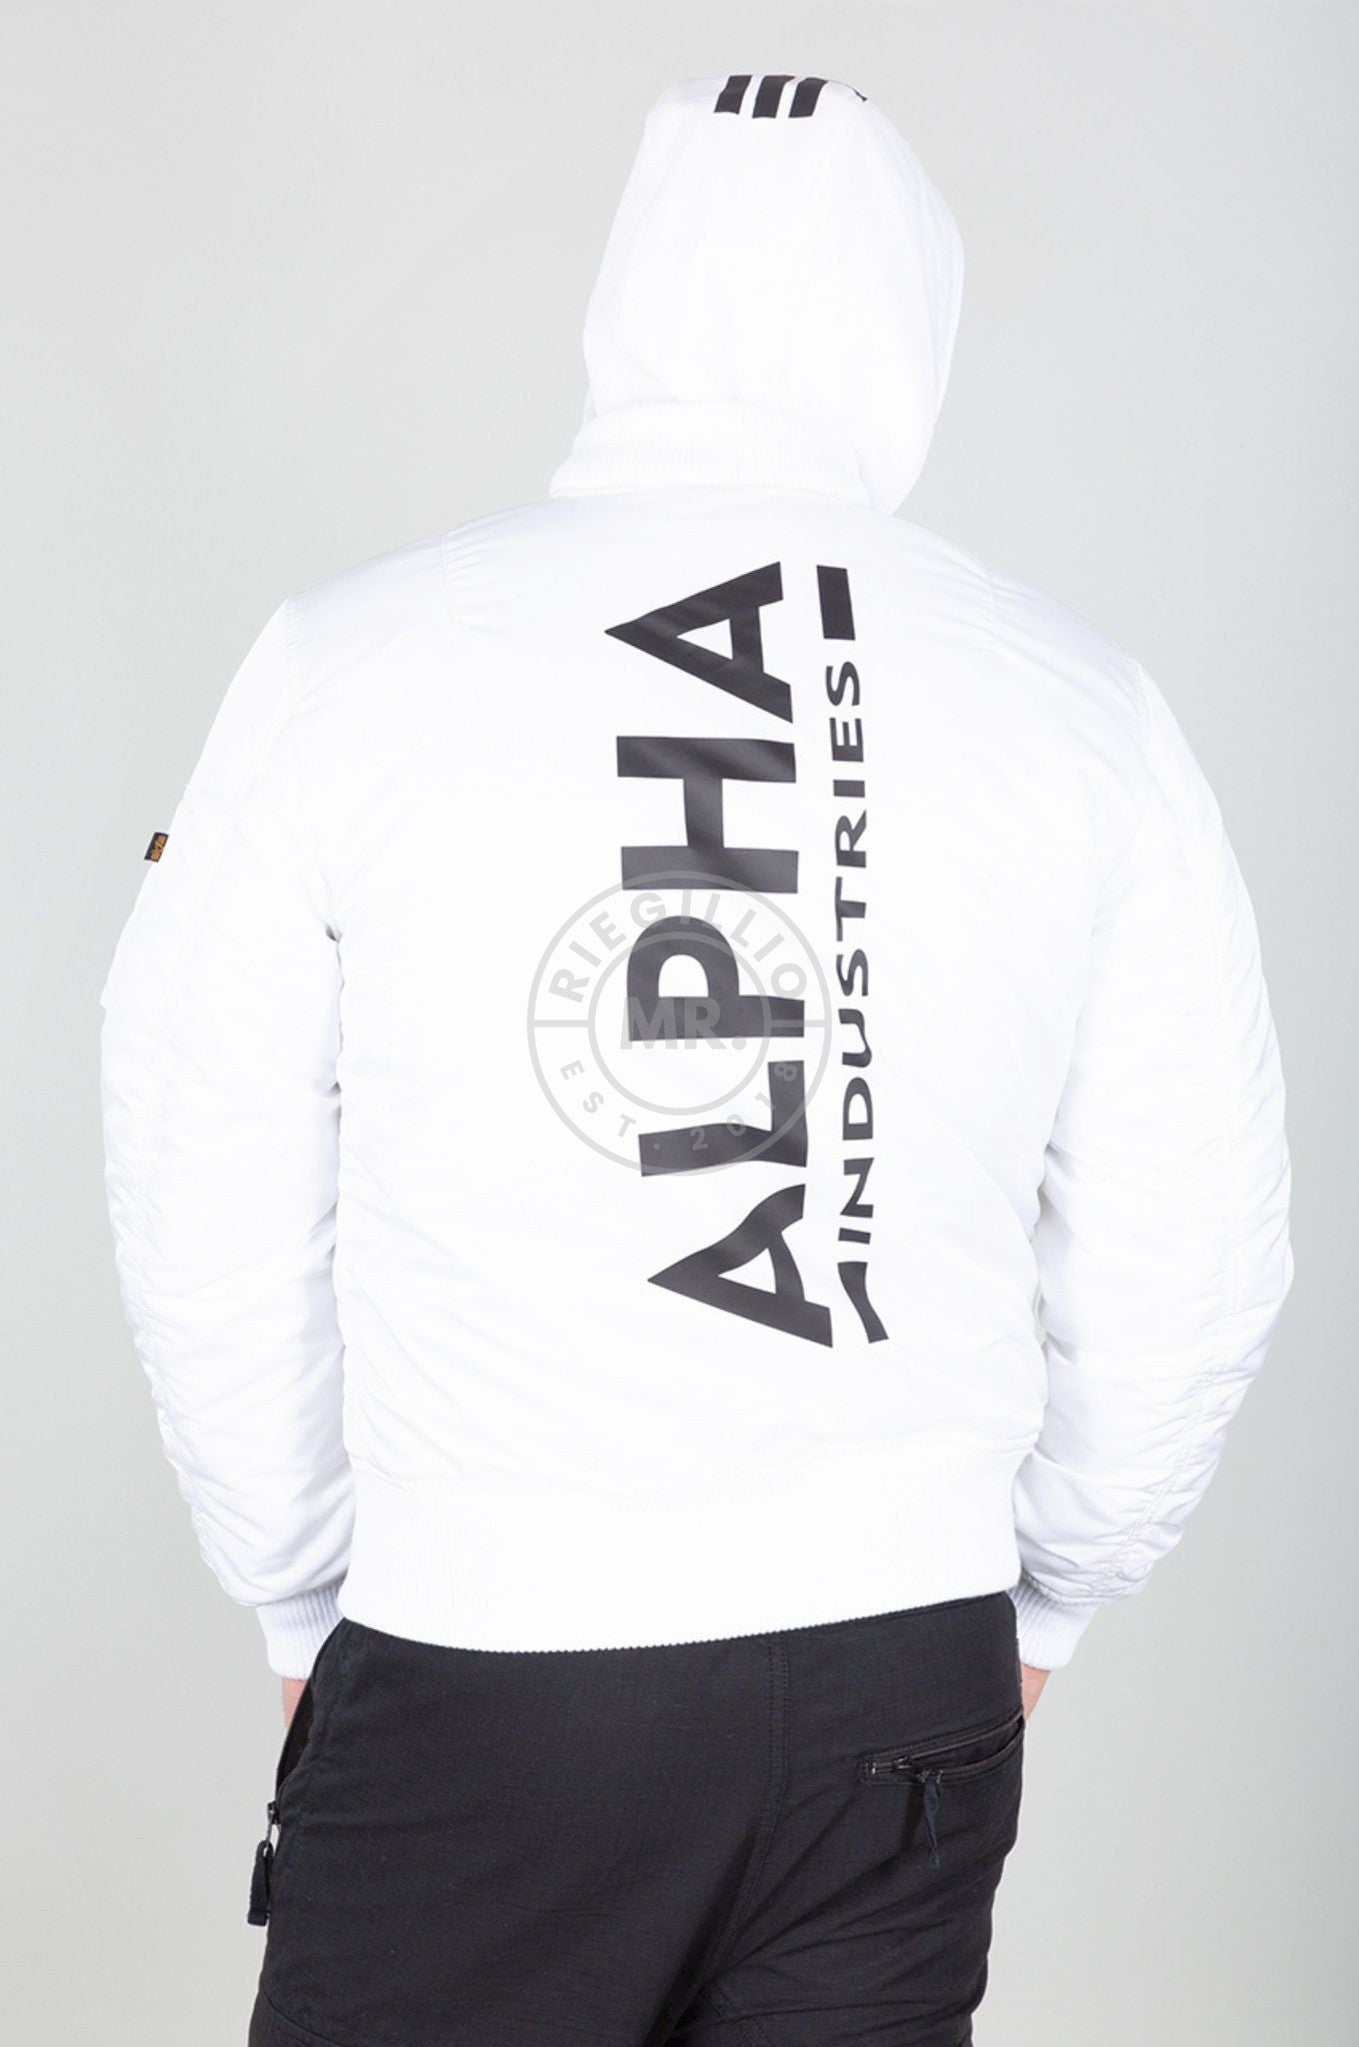 - / White MA-1 Back MR. Black at ZH Industries Riegillio Alpha Jacket Print